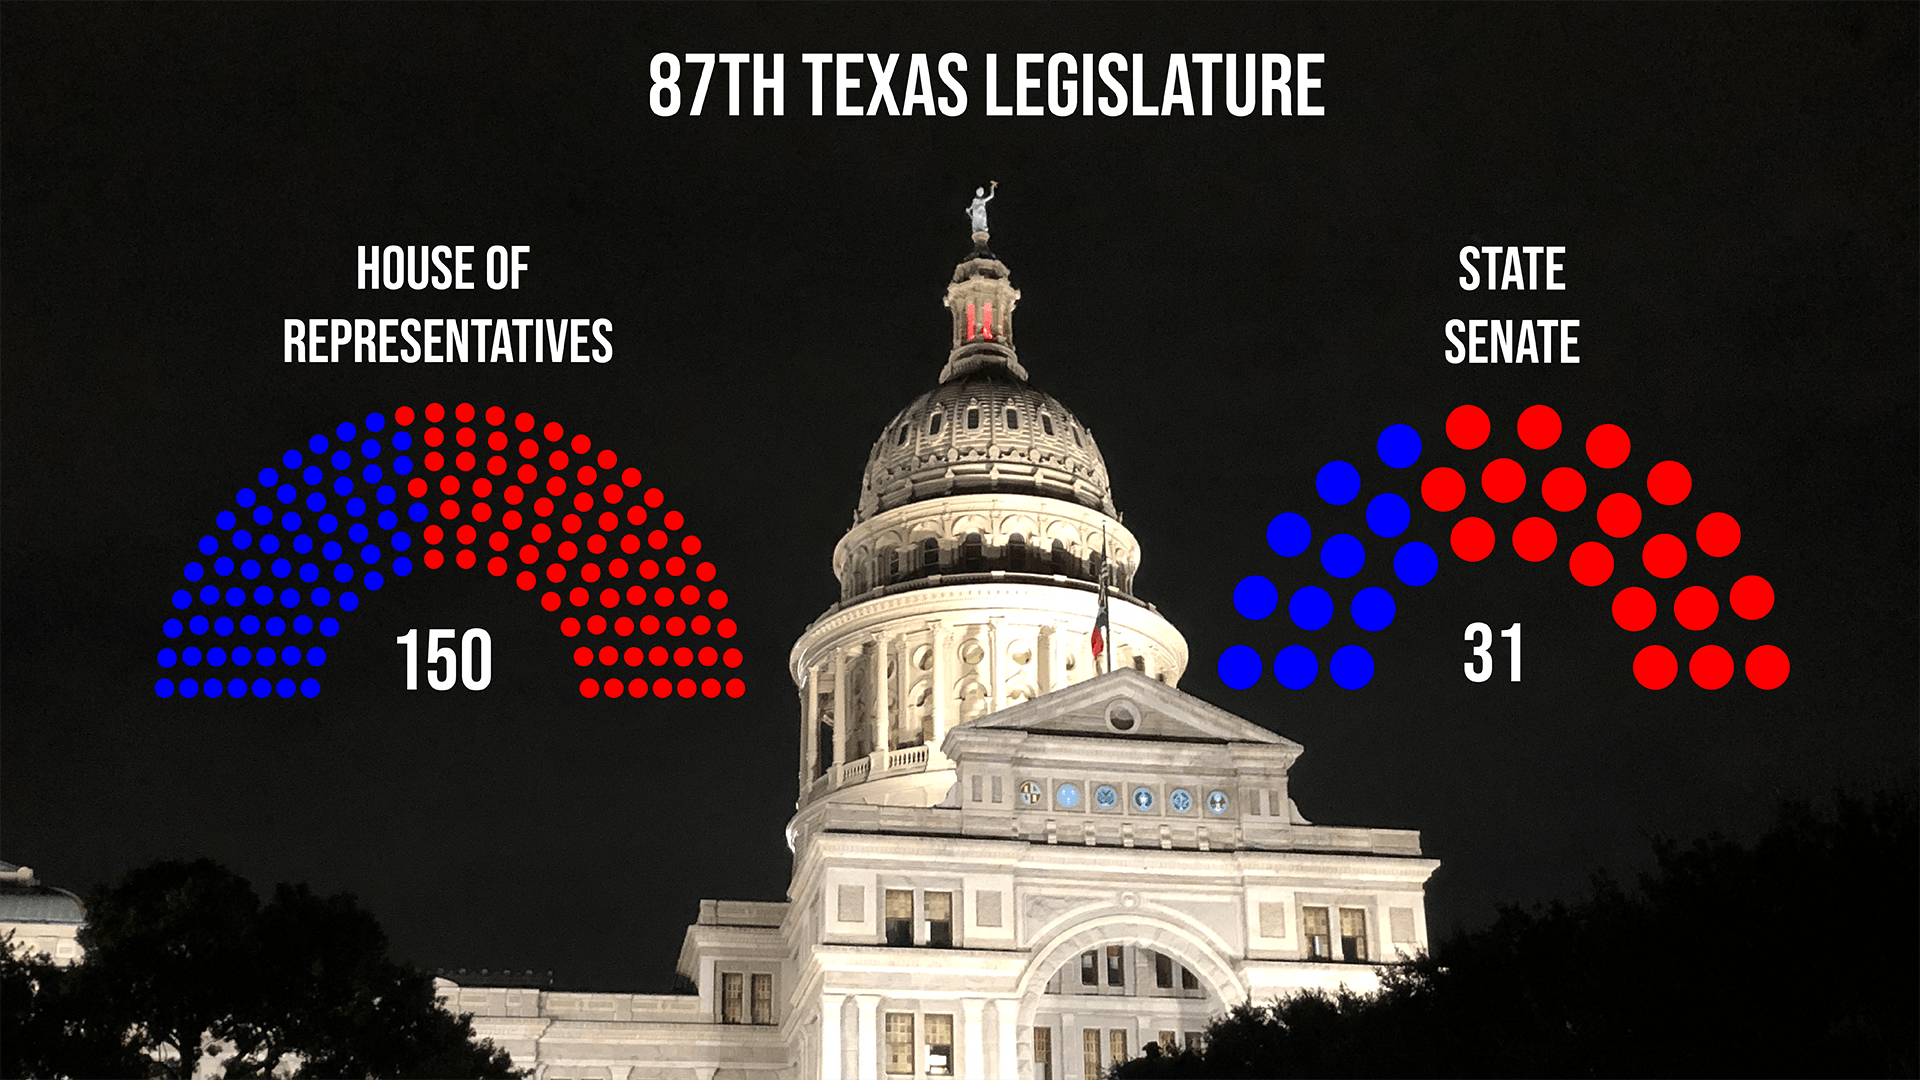 87th Texas Legislature set to meet in Austin amid pandemic